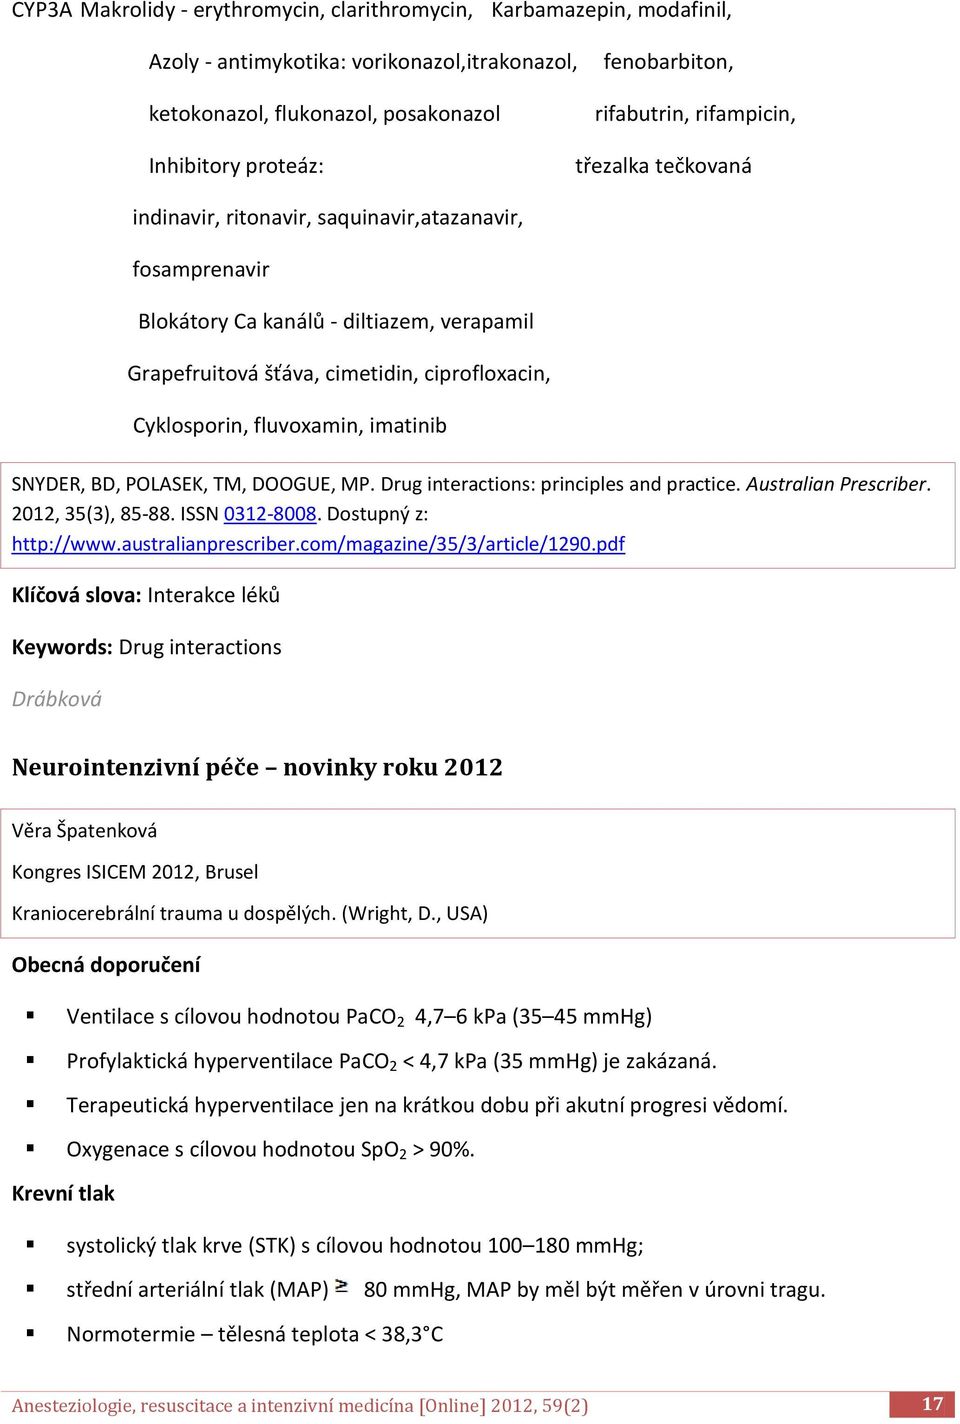 Cyklosporin, fluvoxamin, imatinib SNYDER, BD, POLASEK, TM, DOOGUE, MP. Drug interactions: principles and practice. Australian Prescriber. 2012, 35(3), 85-88. ISSN 0312-8008. Dostupný z: http://www.